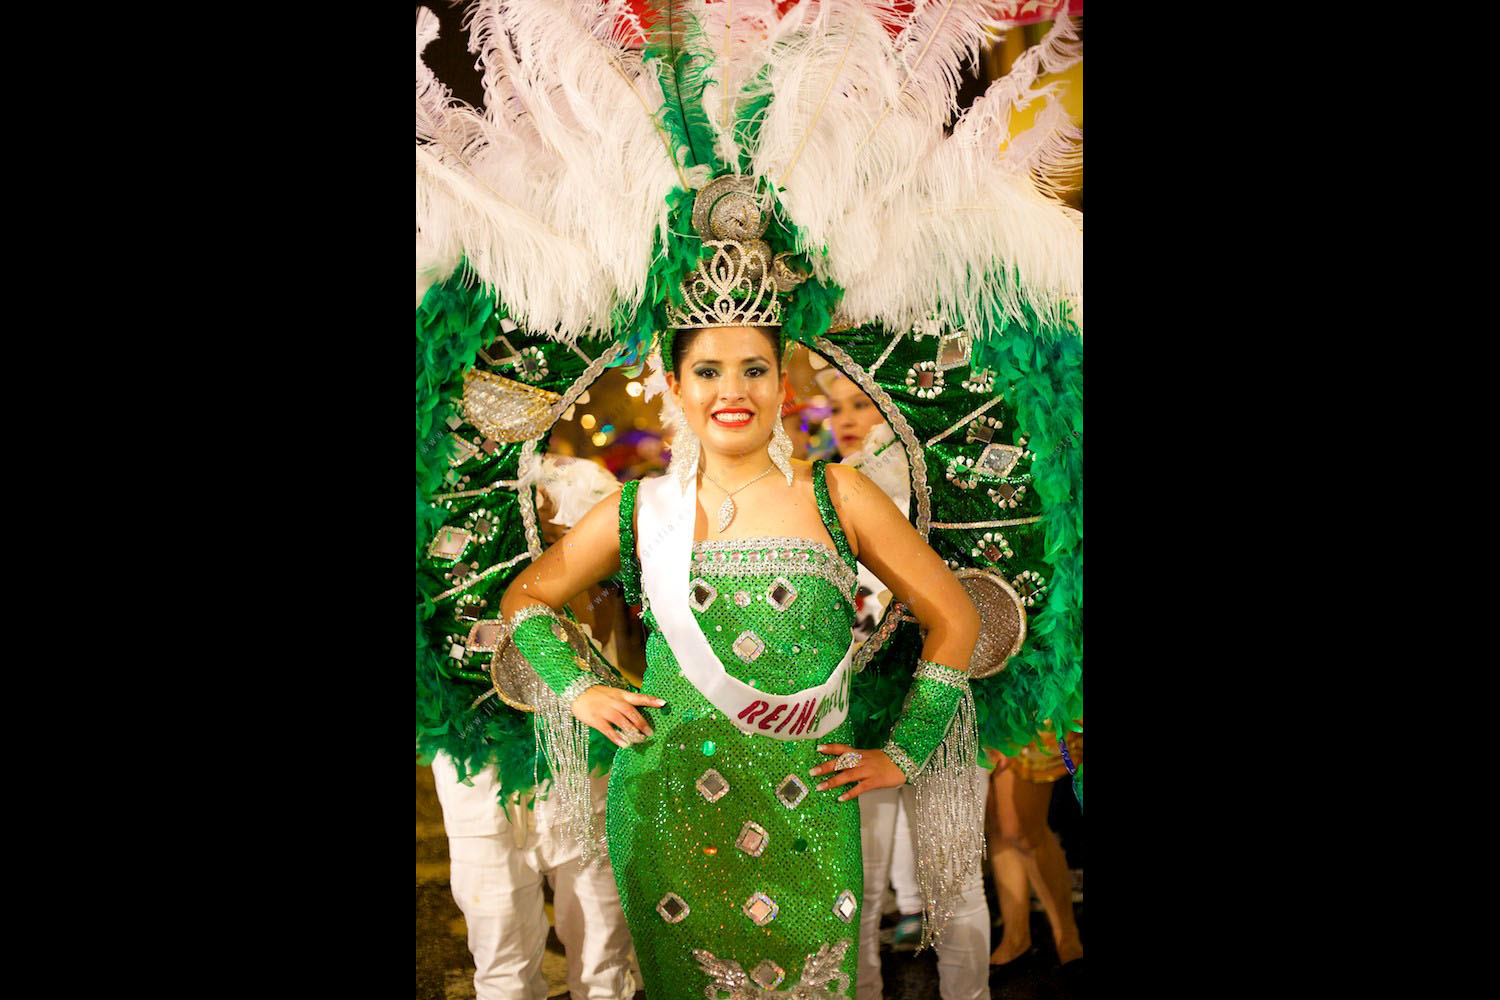 Carnaval de Barakaldo, disfraz de reina de la fiesta, con vestido verde de plumas.